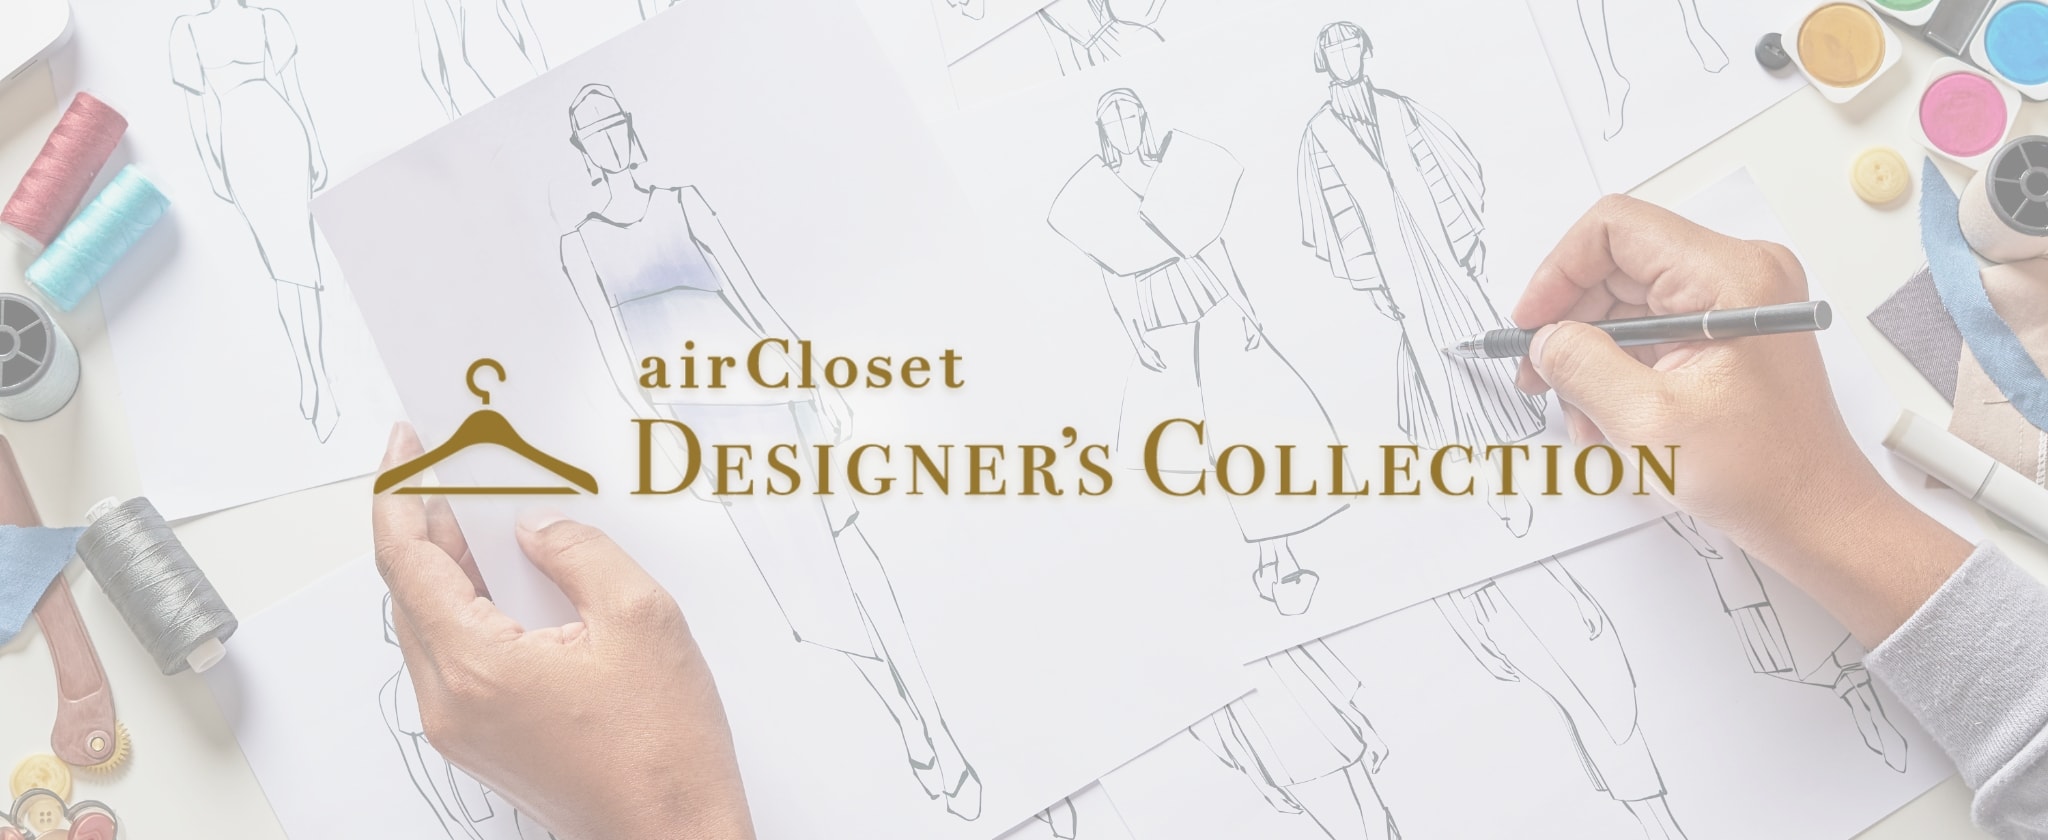 airCloset Designer's Collection